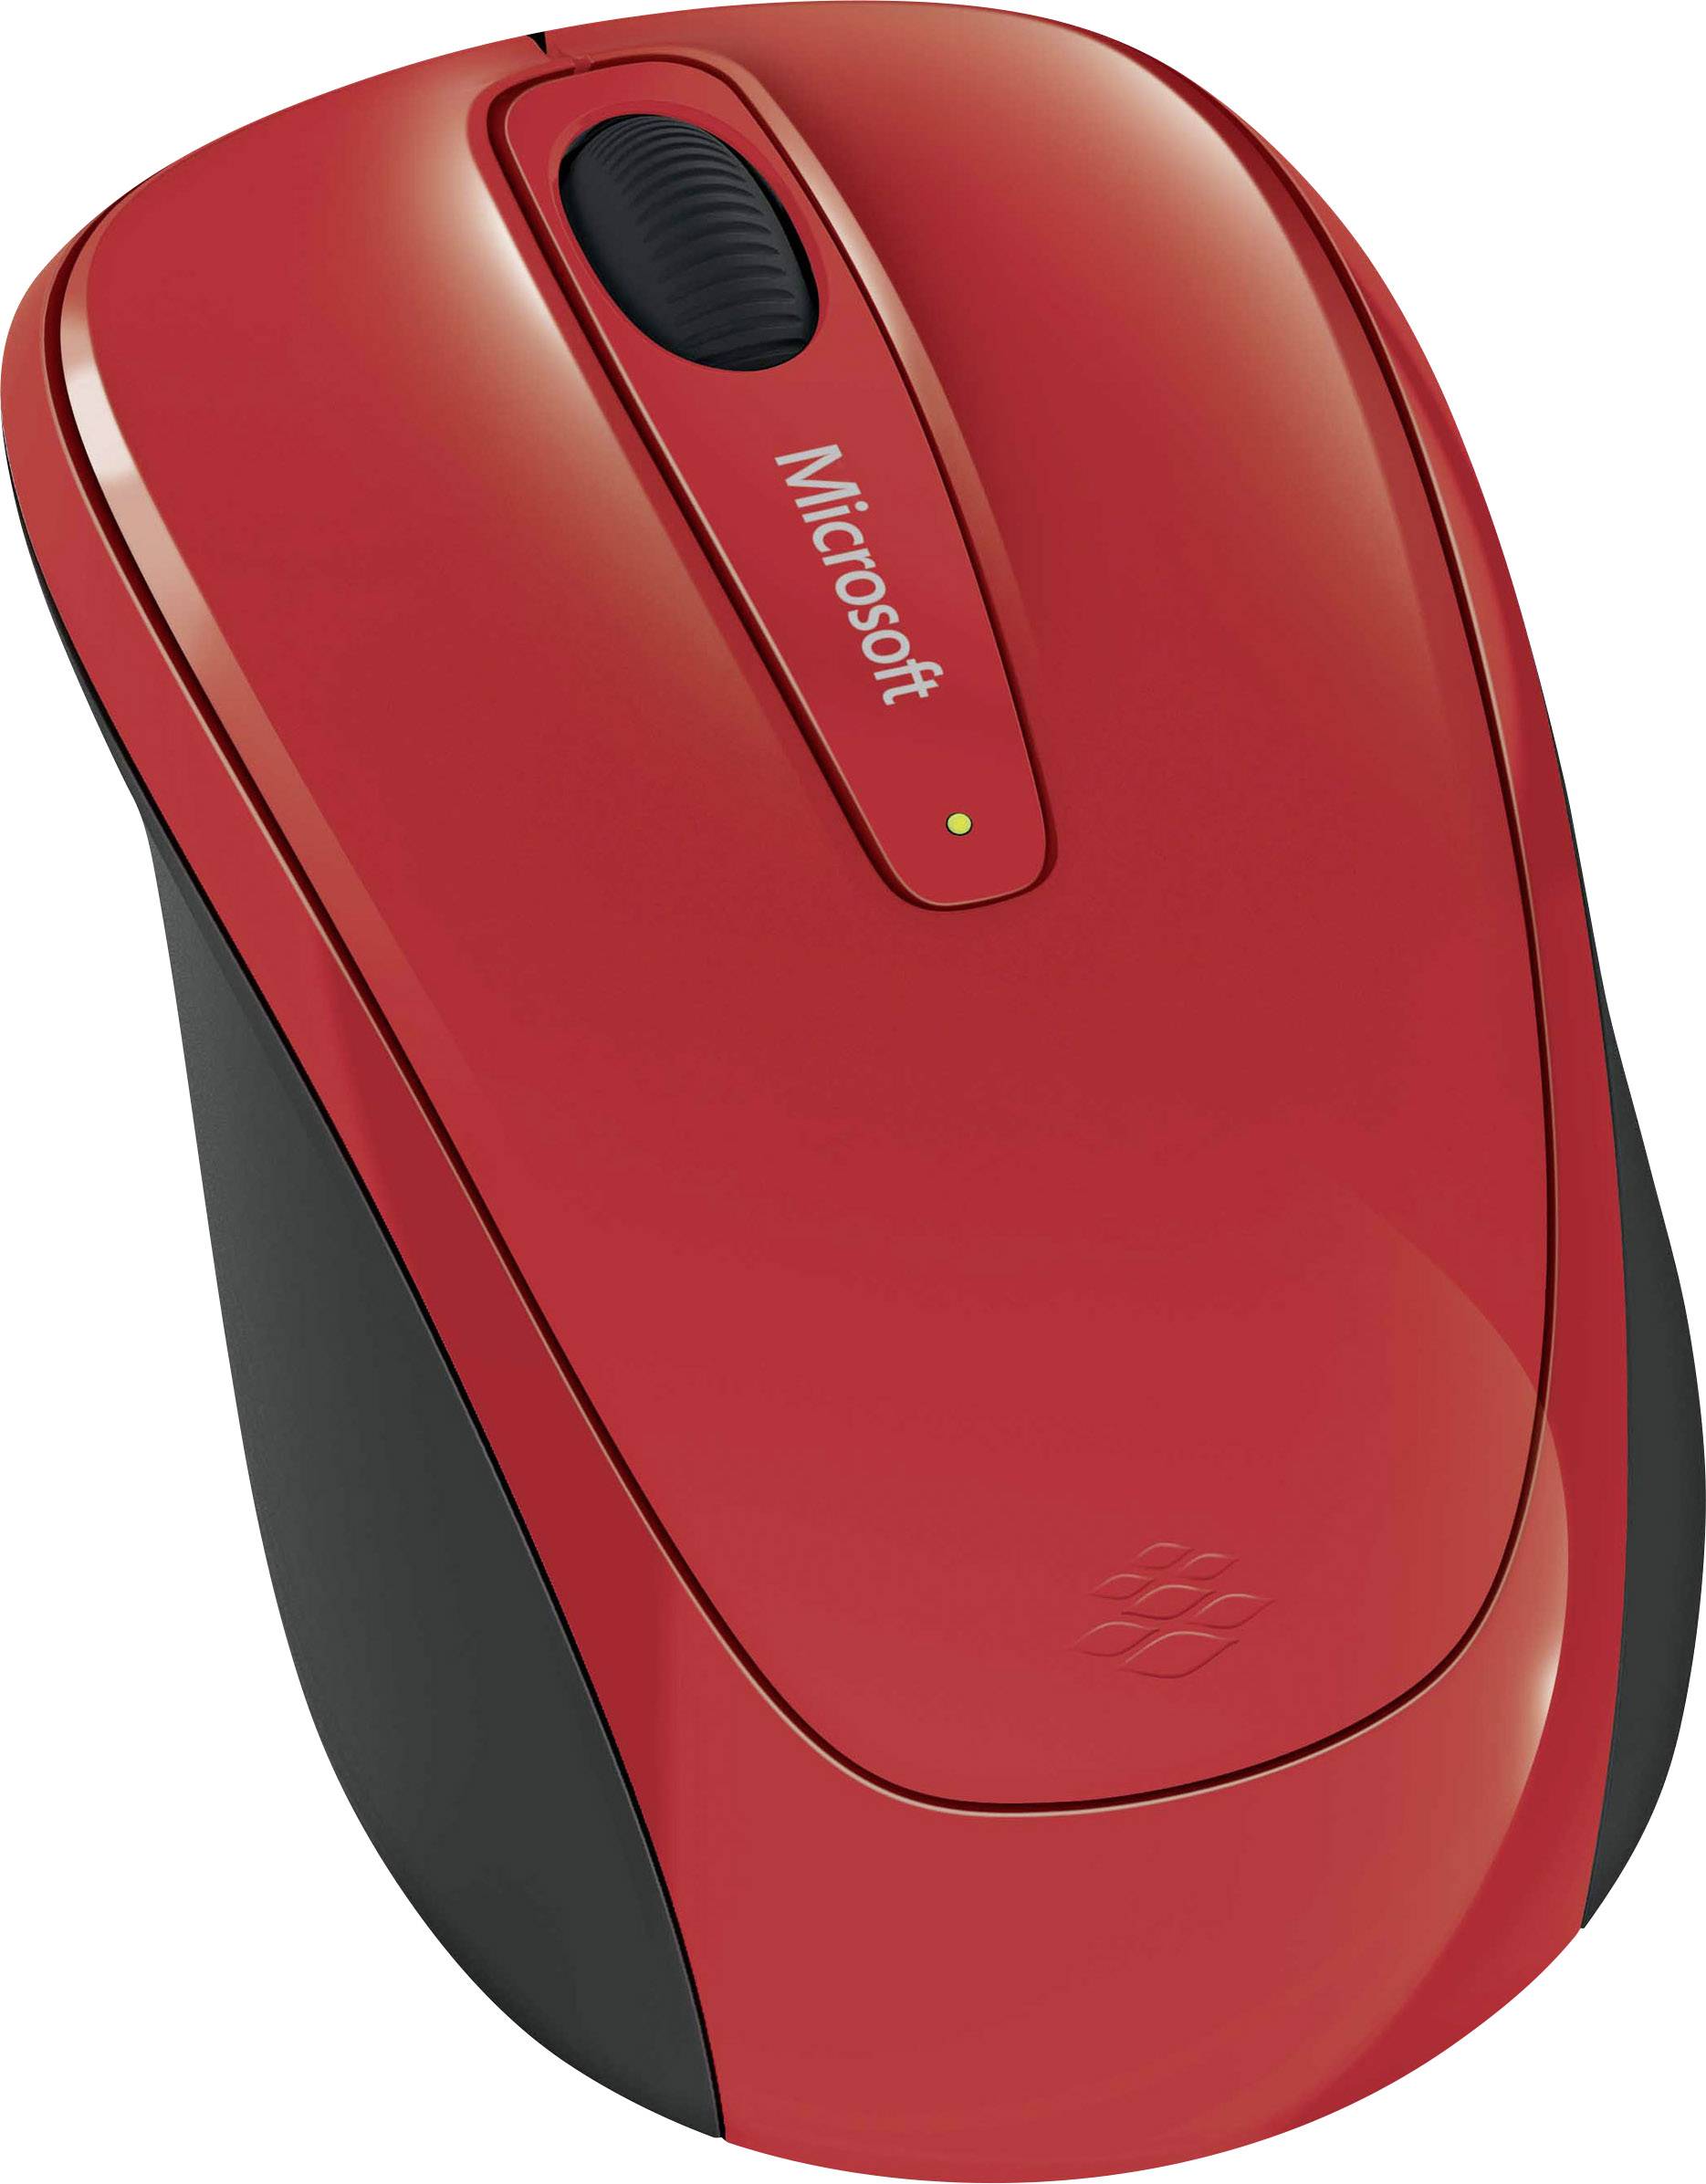 microsoft wireless mouse 3500 choppy